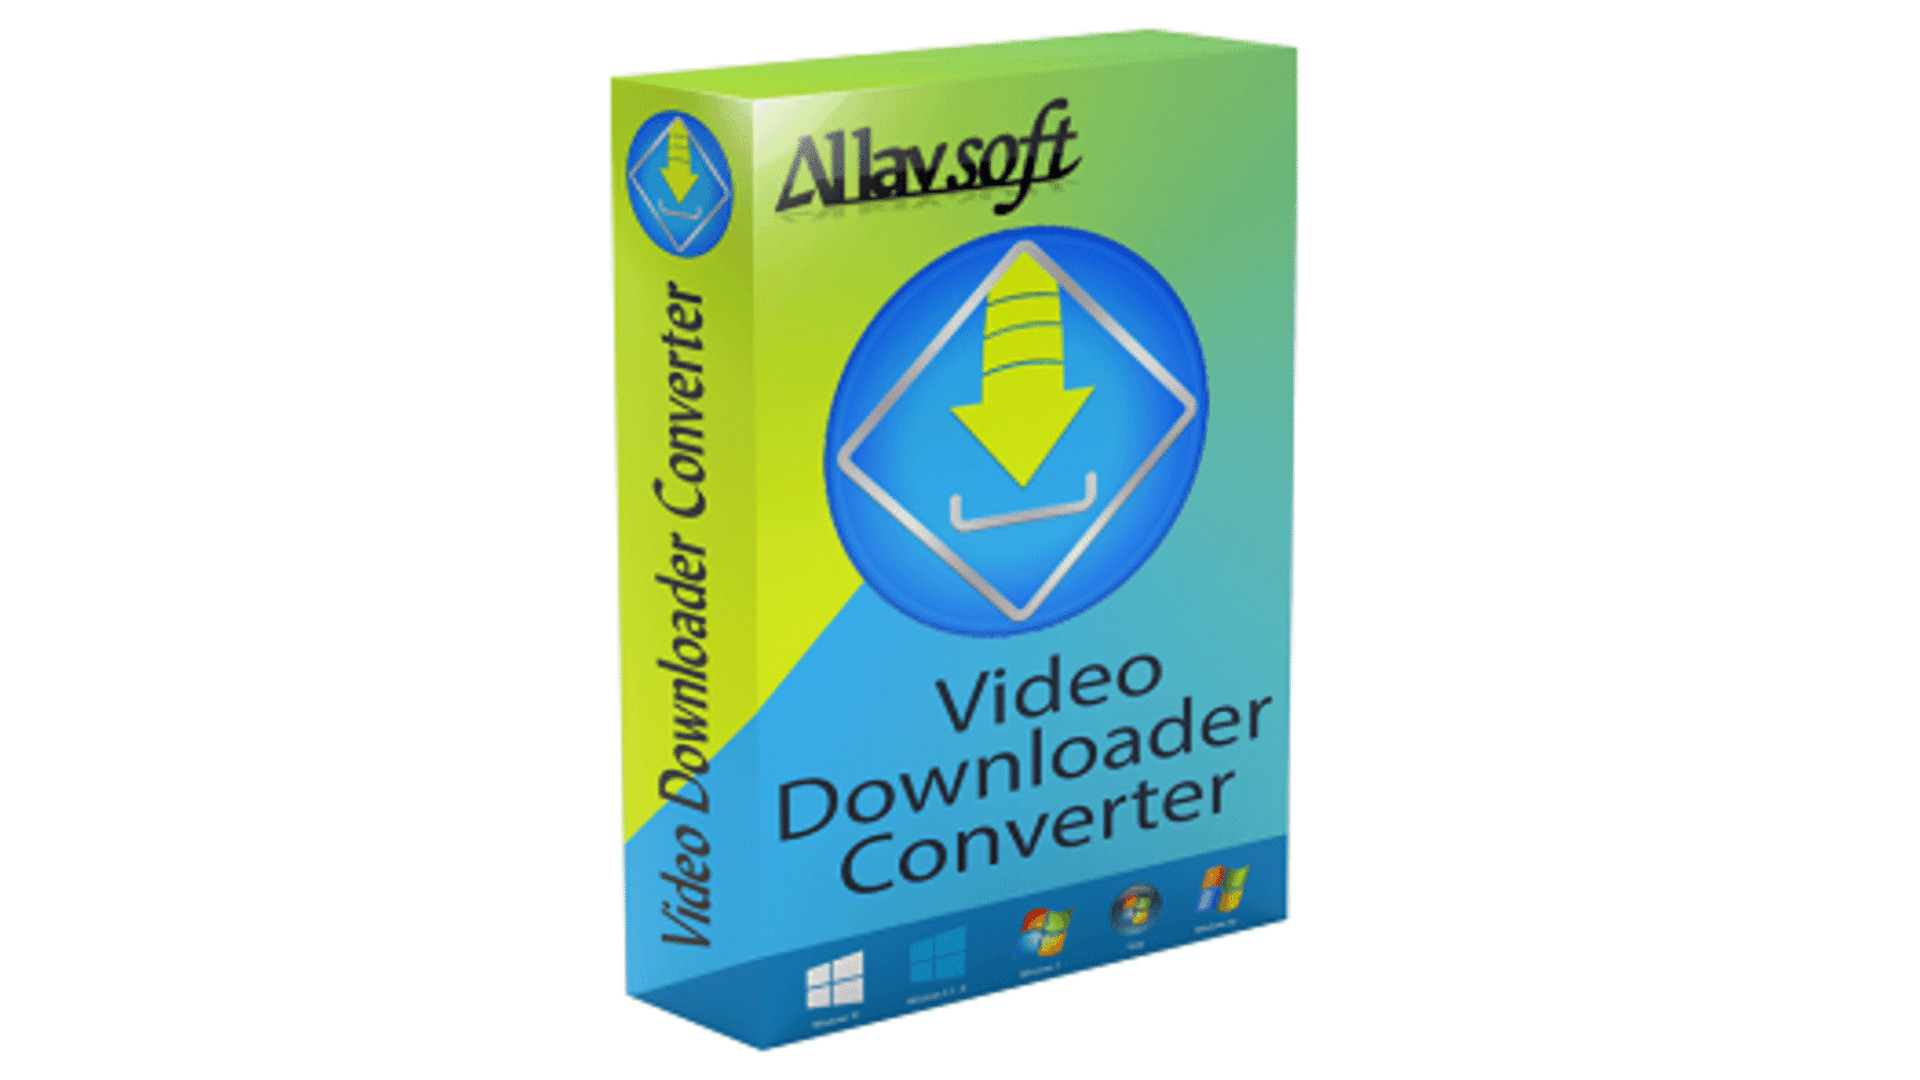 Allavsoft Video Downloader and Converter for Windows CD Key 2.75 $